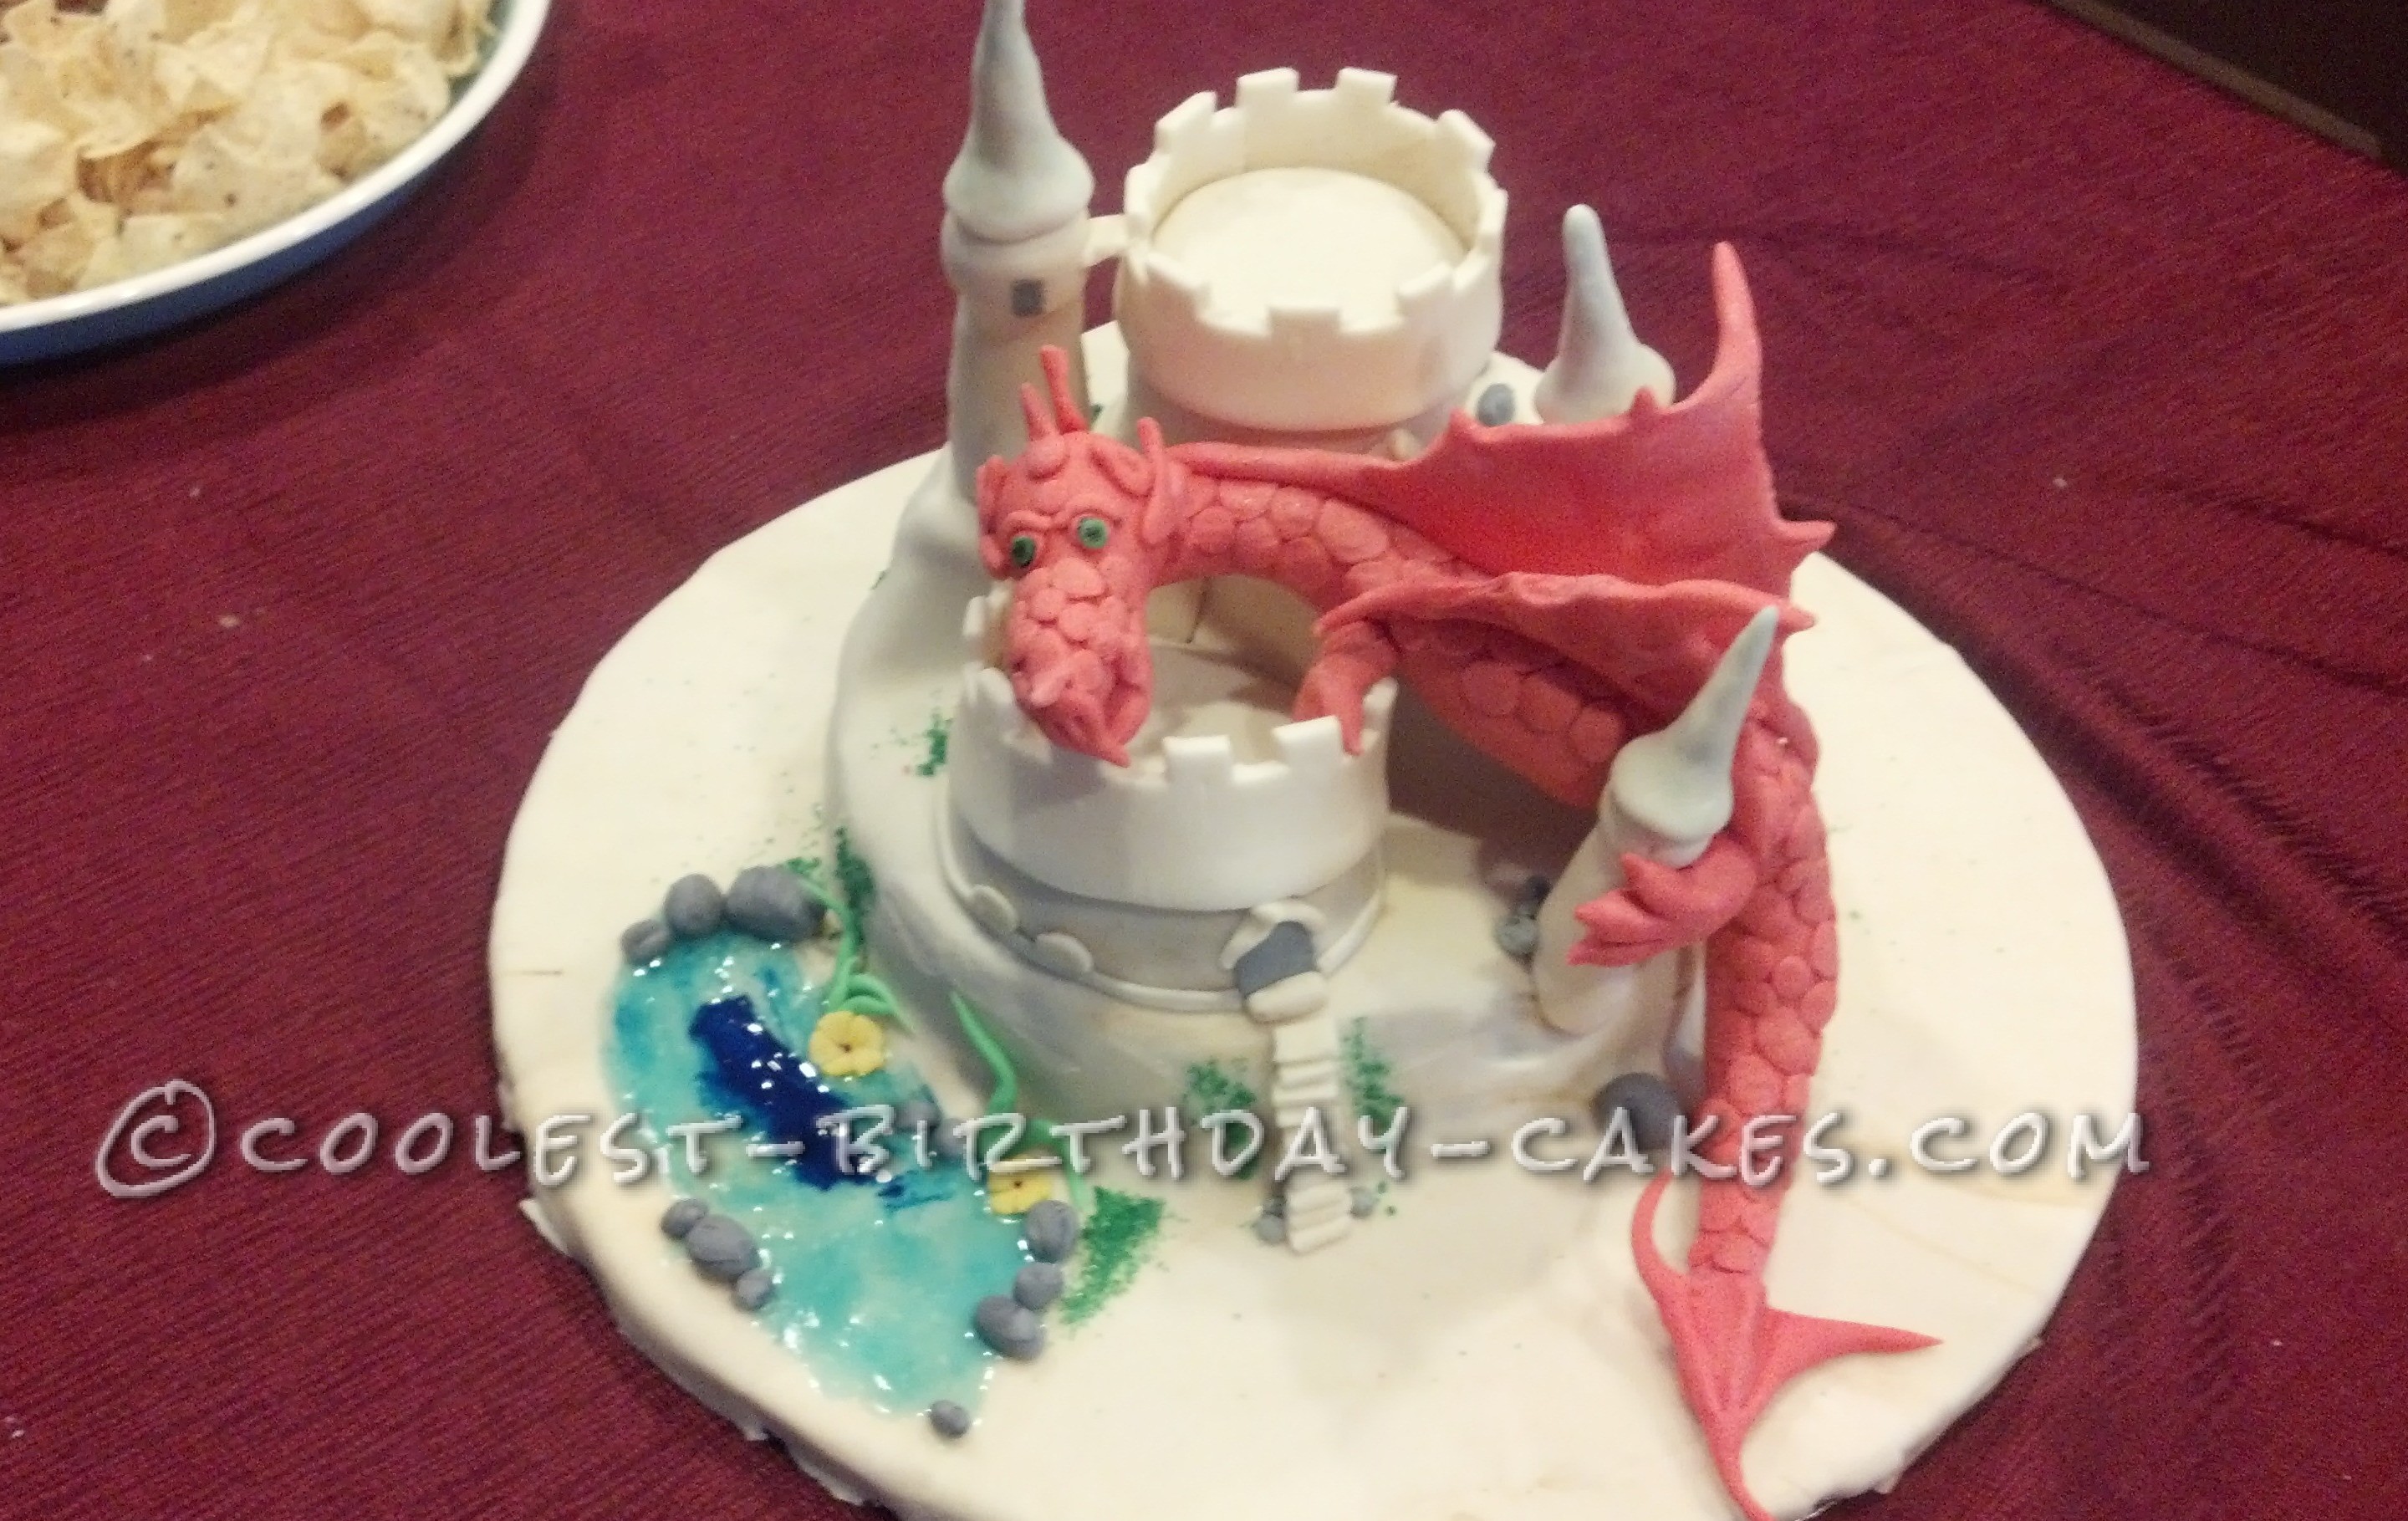 Cool Dragon Slayer Birthday Cake